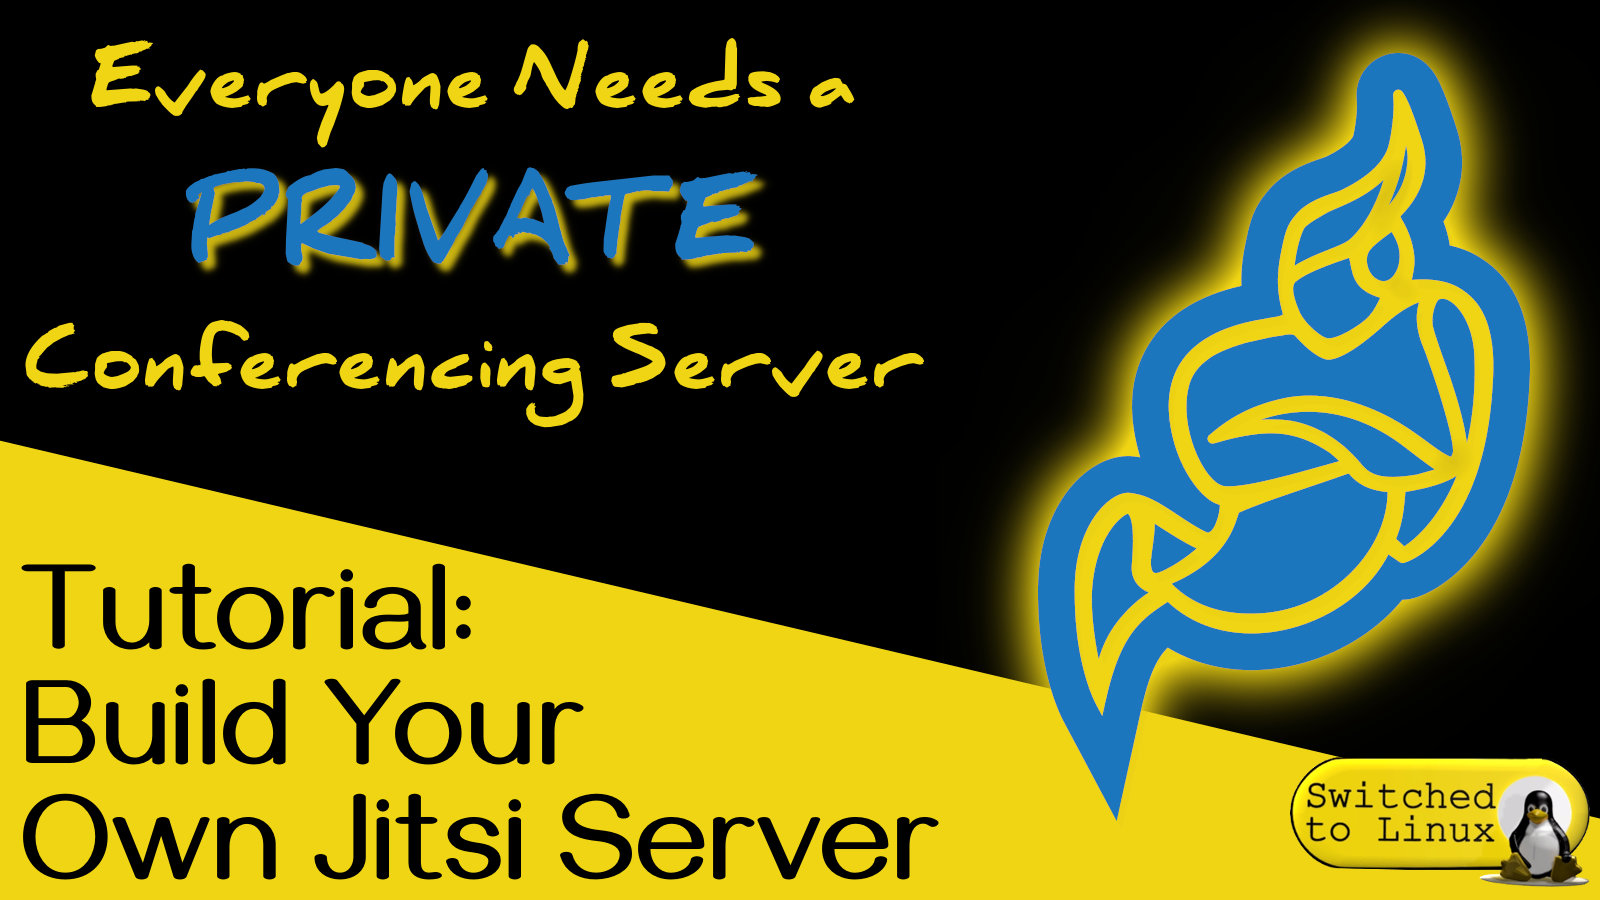 Installing a Private Jitsi Server!